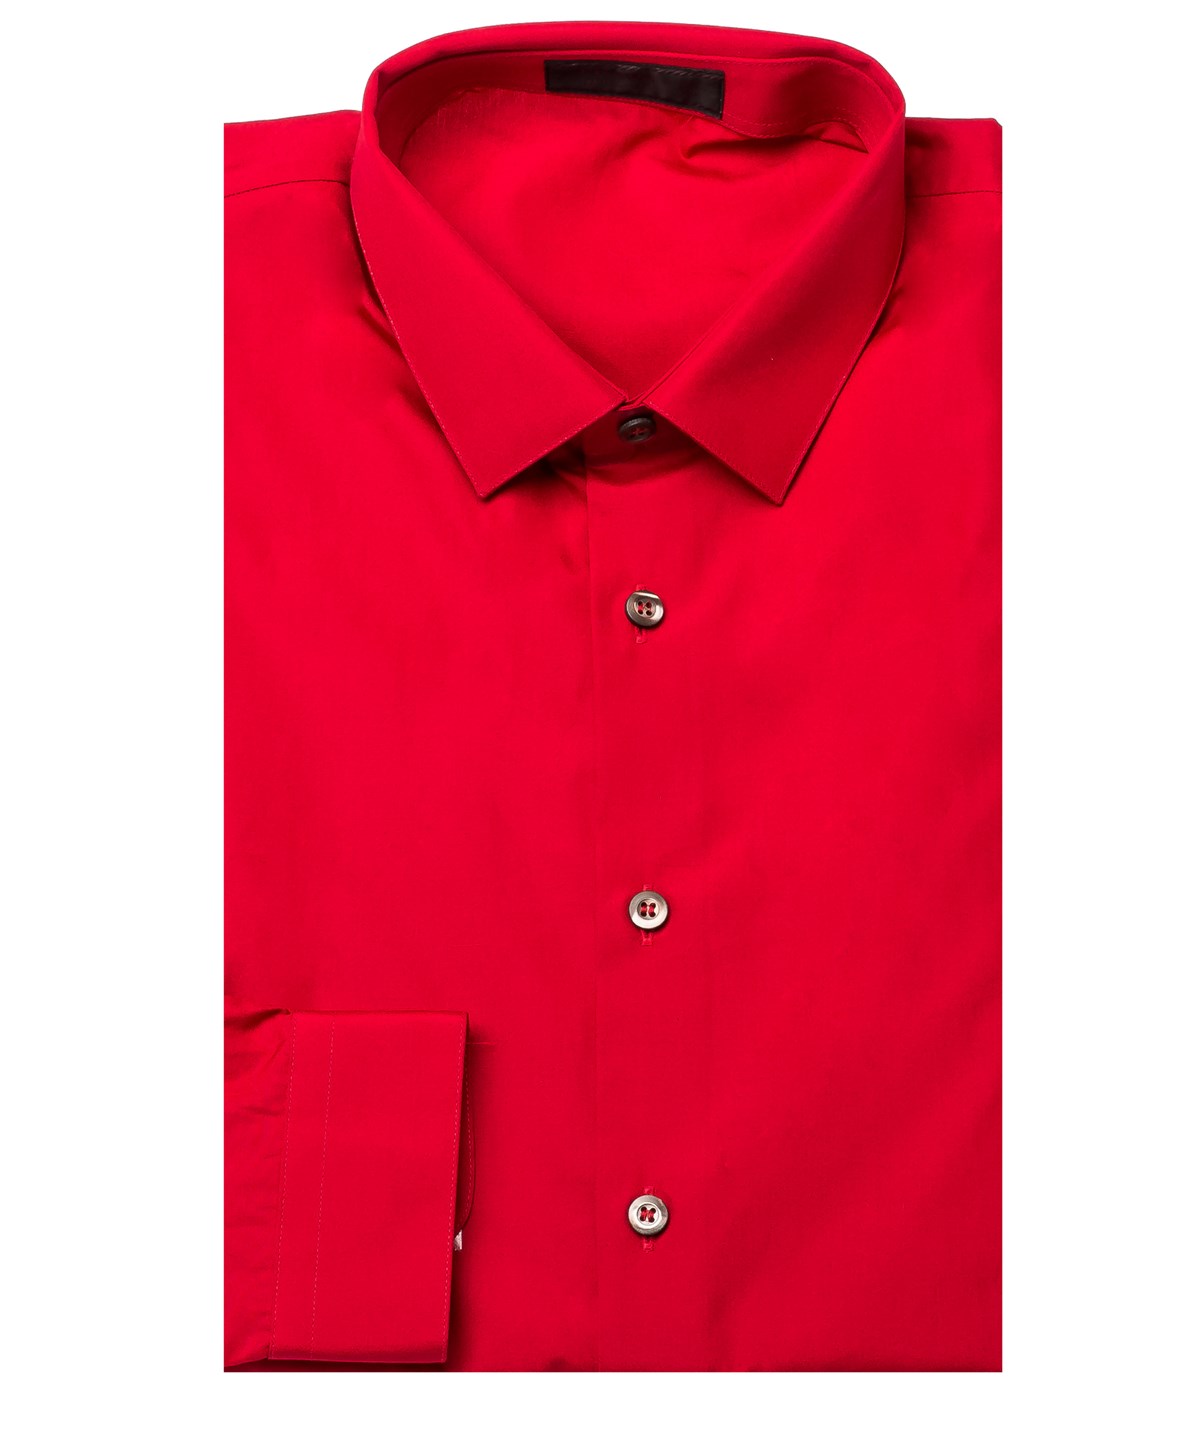 prada red shirt